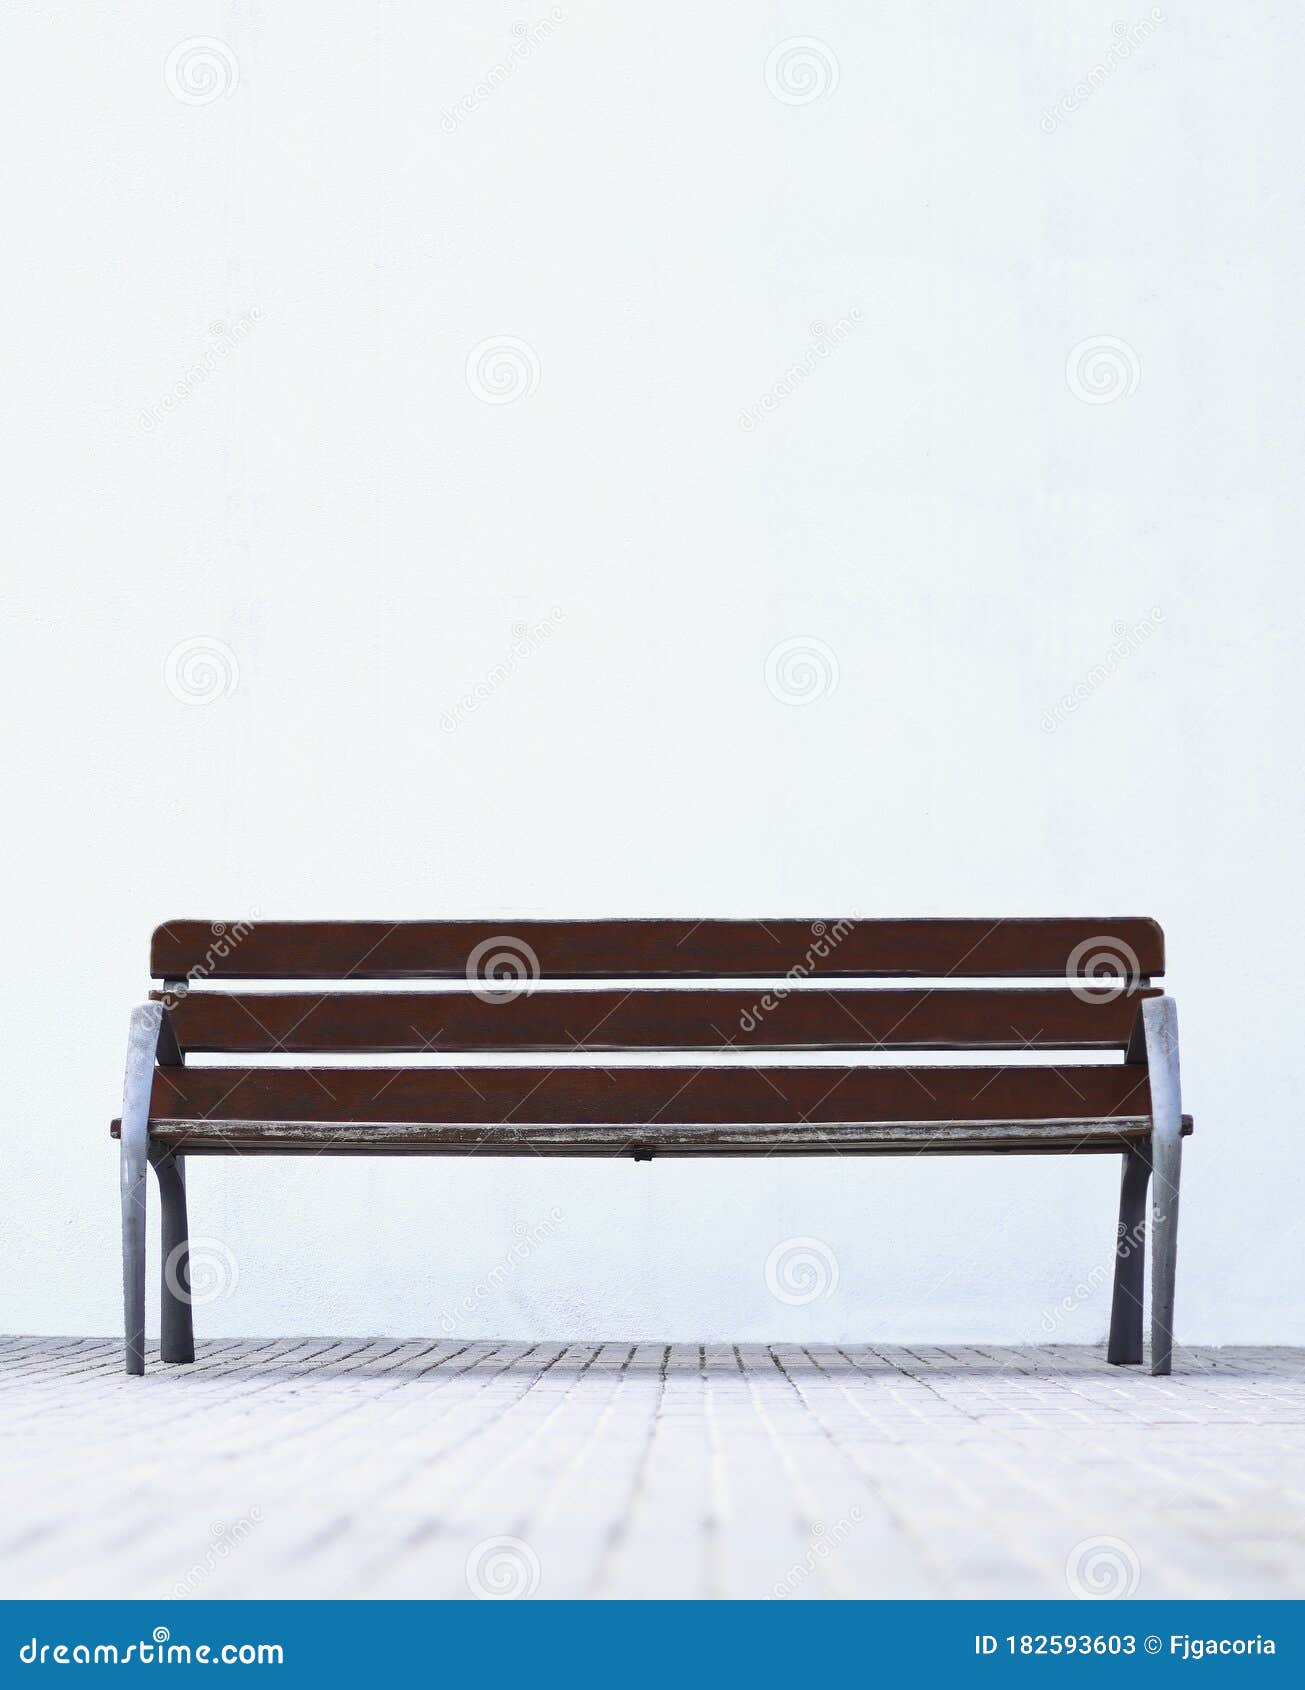 minimalist park bench with white background